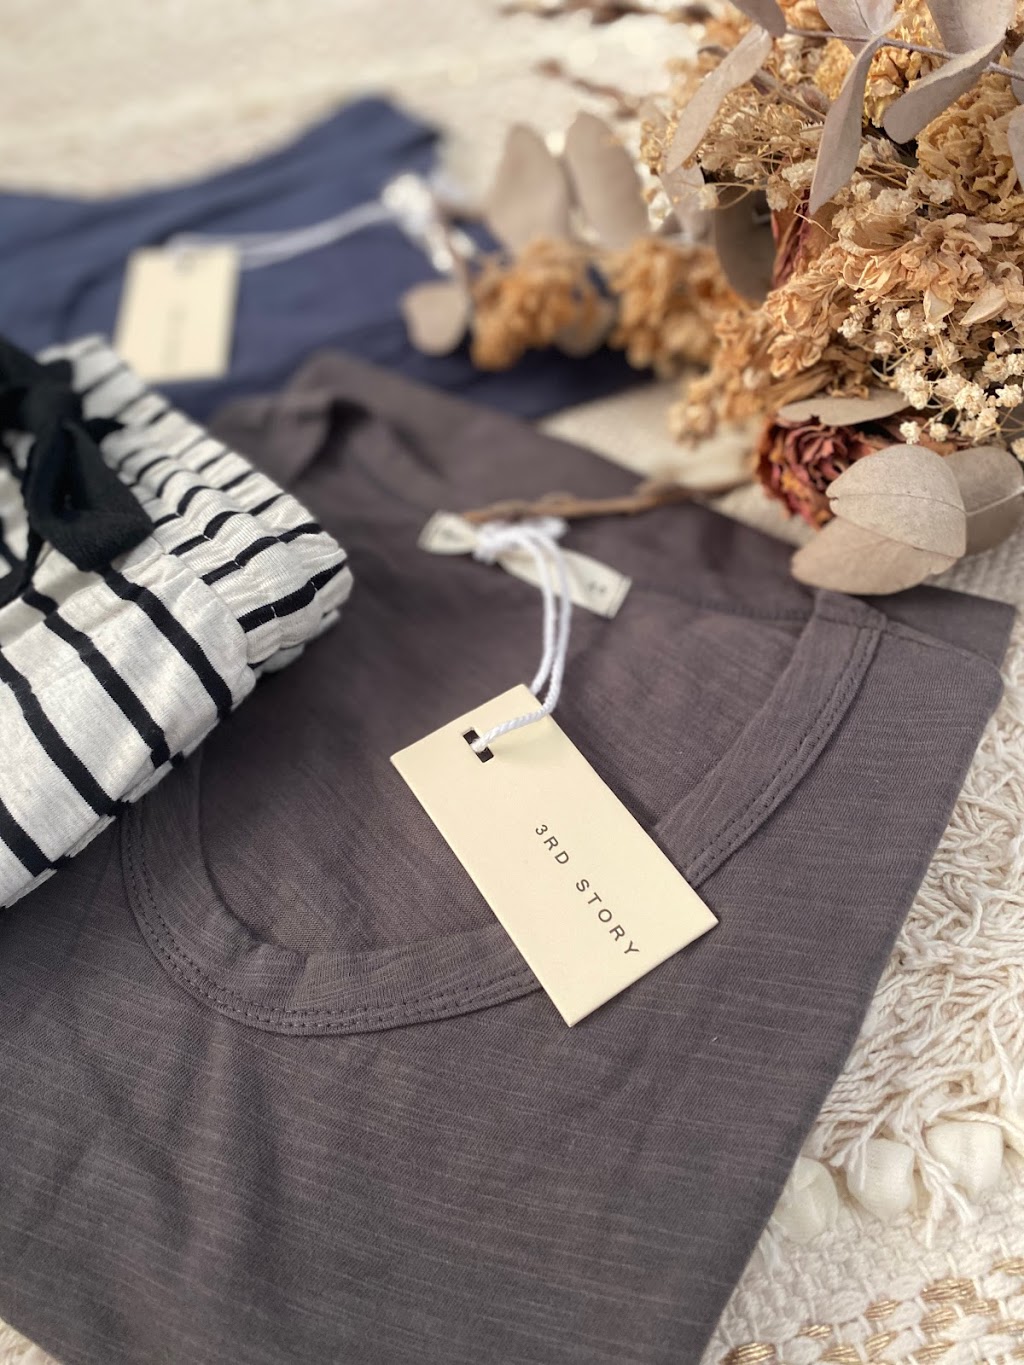 Cloth and Bale | clothing store | Box 149, Nairne SA 5252, Australia